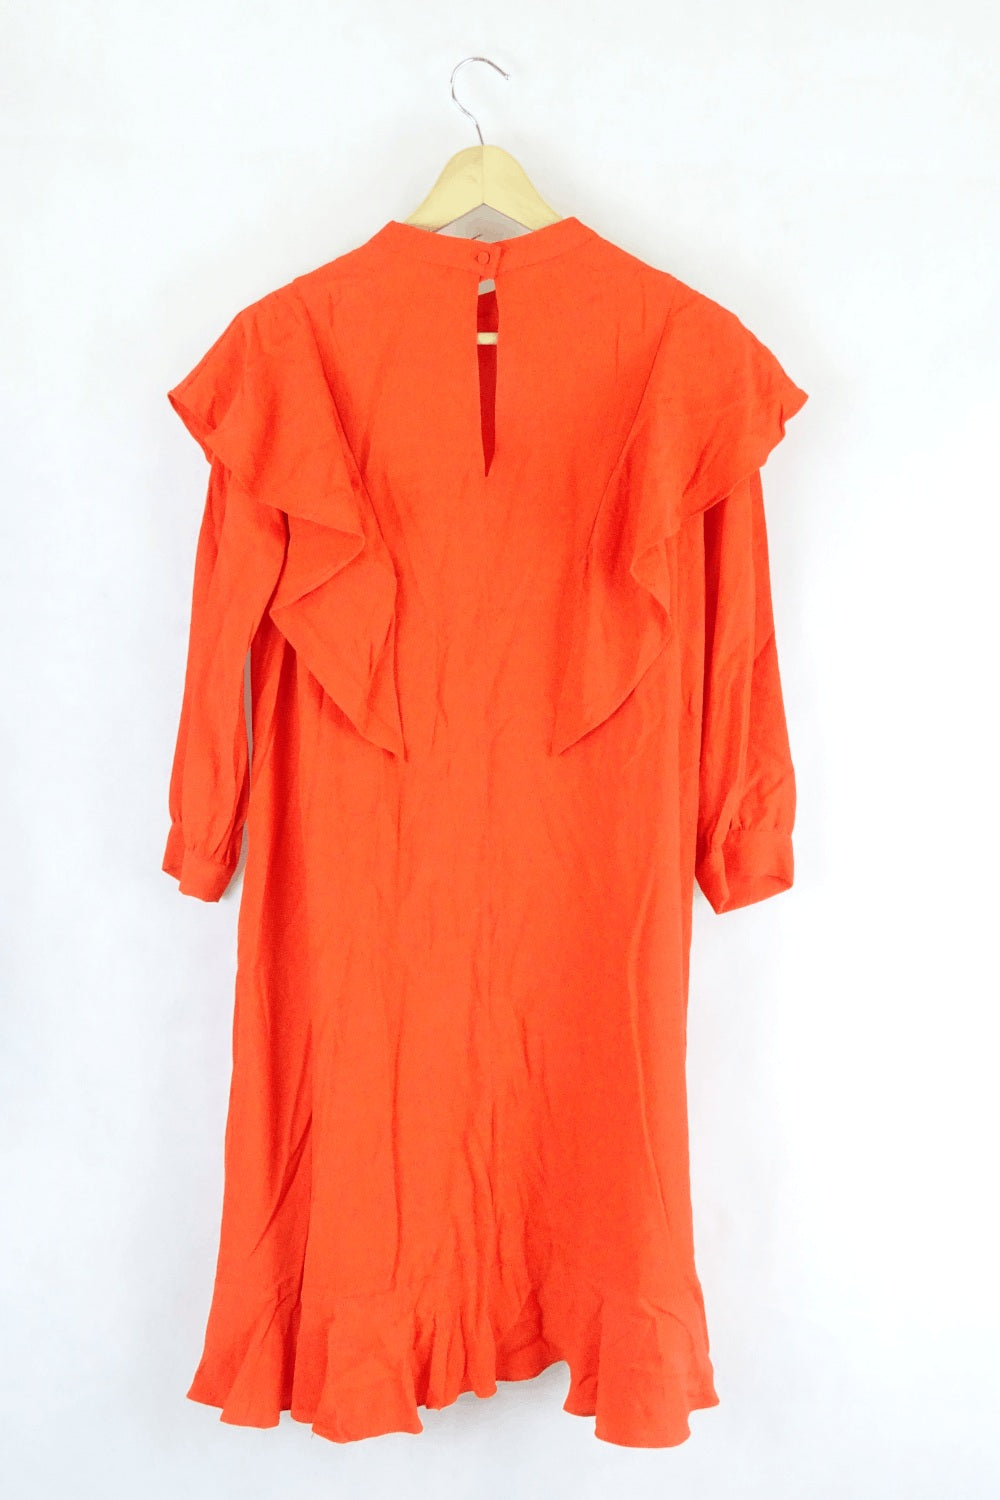 & Other Stories Orange Dress 10